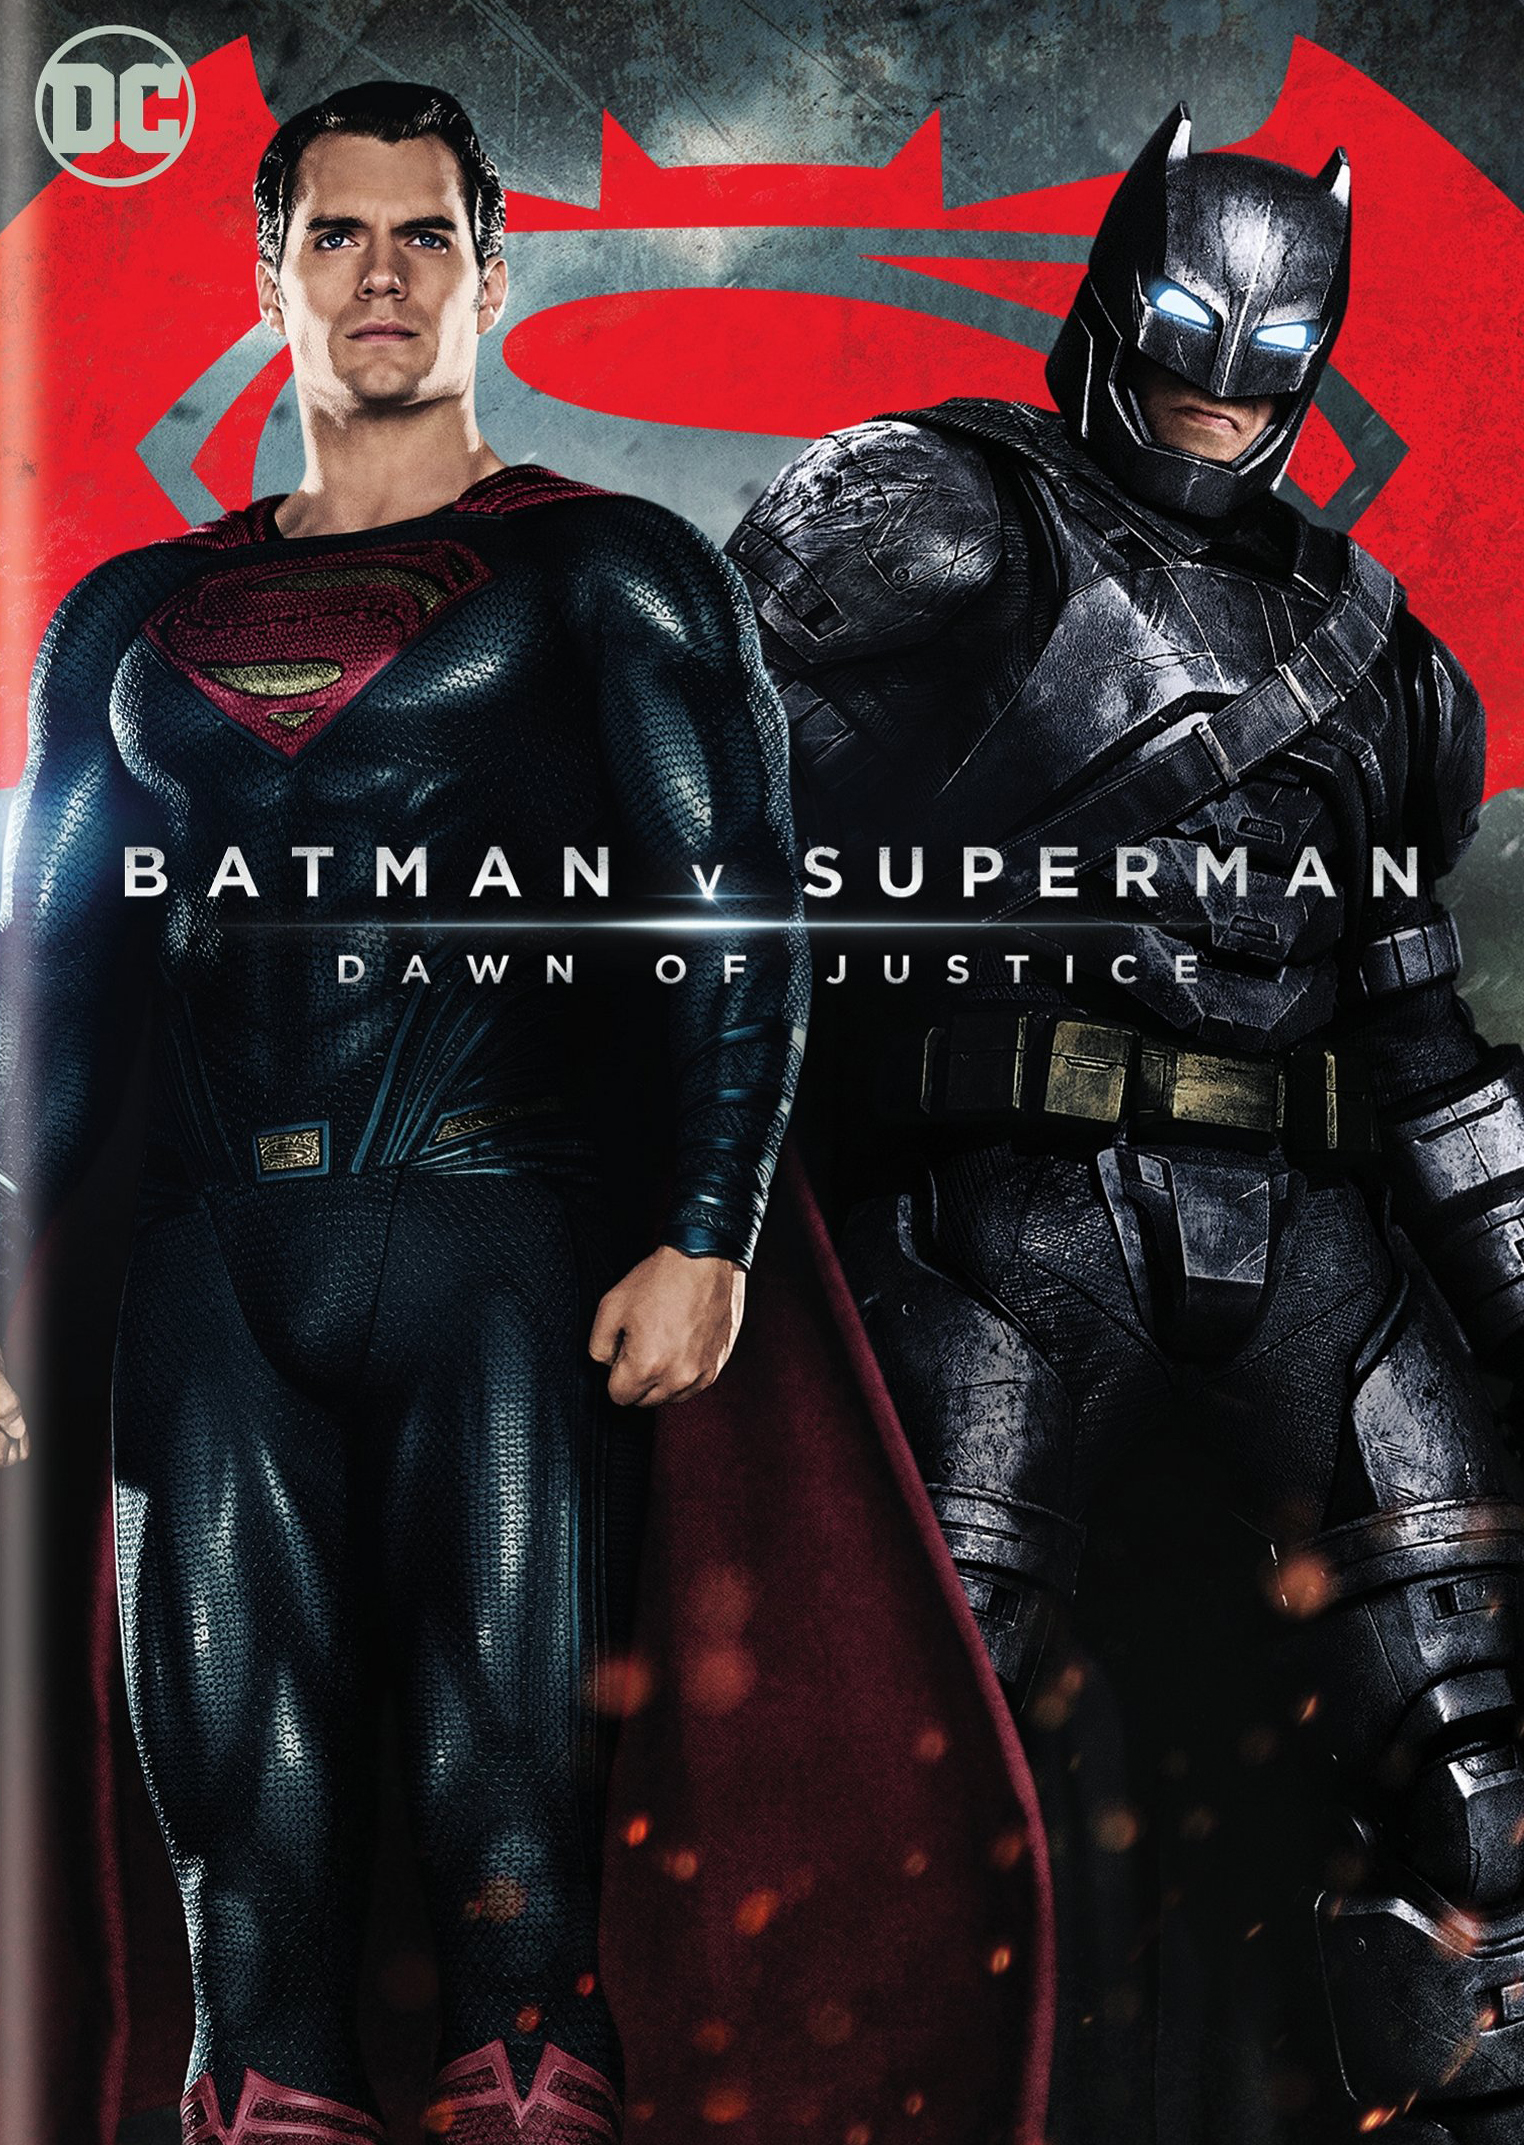 Batman v Superman: Dawn of Justice [DVD] [2016] - Best Buy
